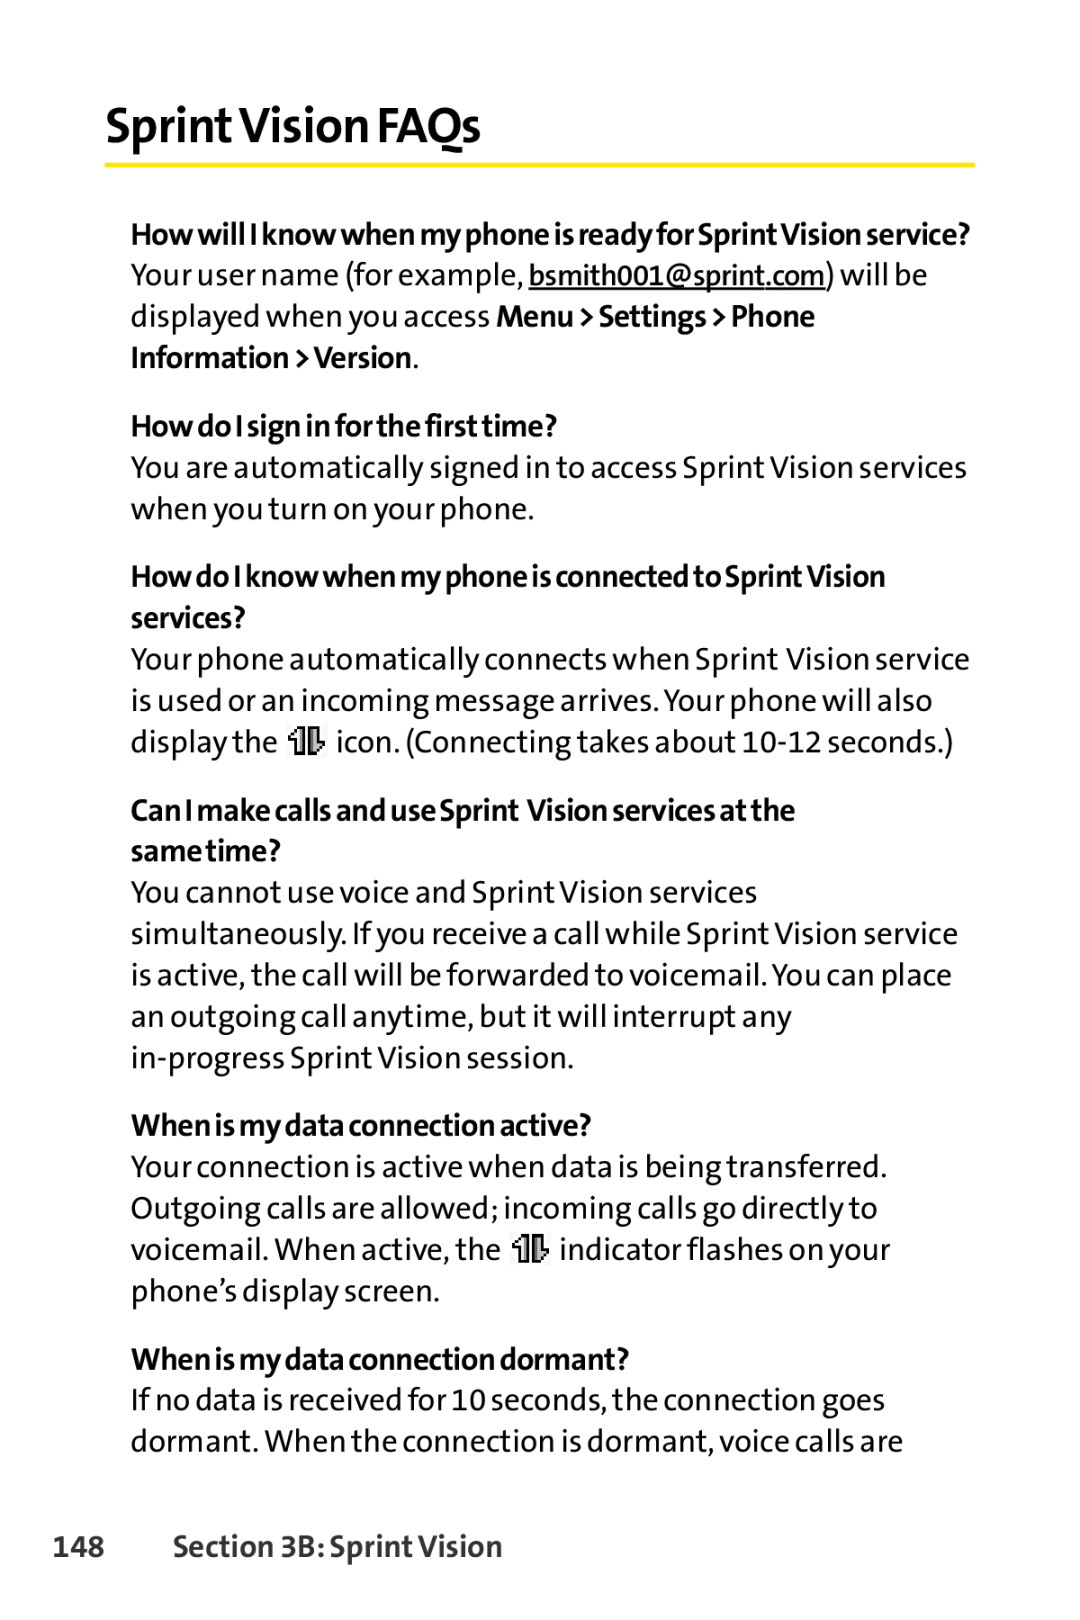 Sprint Nextel LX160 SprintVision FAQs, HowwillIknowwhenmyphoneisreadyforSprintVisionservice?, HowdoIsigninforthefirsttime? 